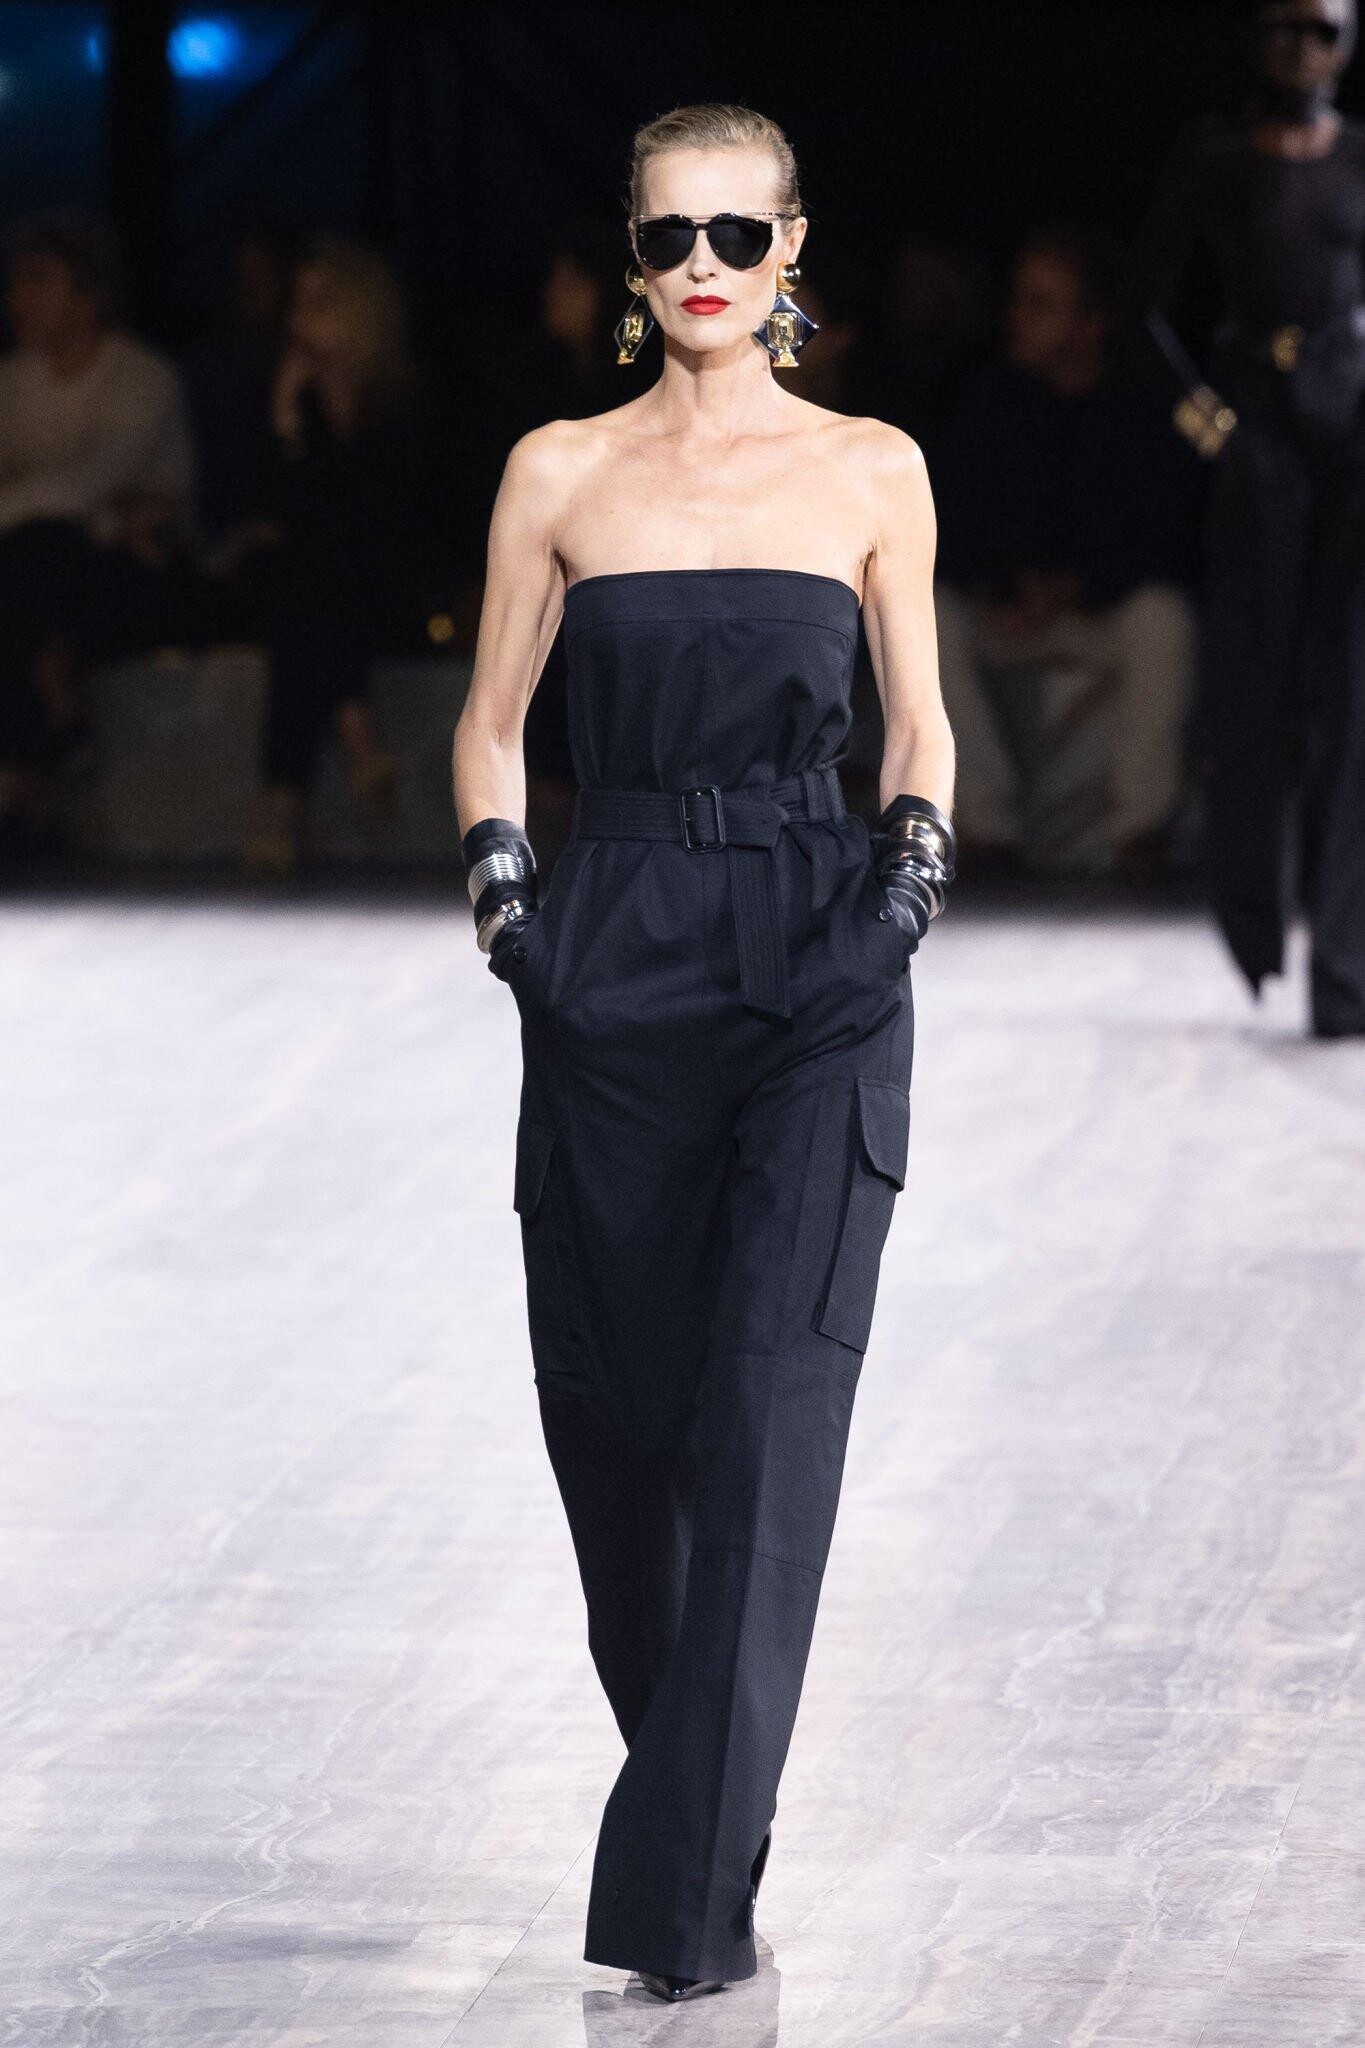 1997 - McQueen 4 Givenchy Couture Show - Eva Herzigova